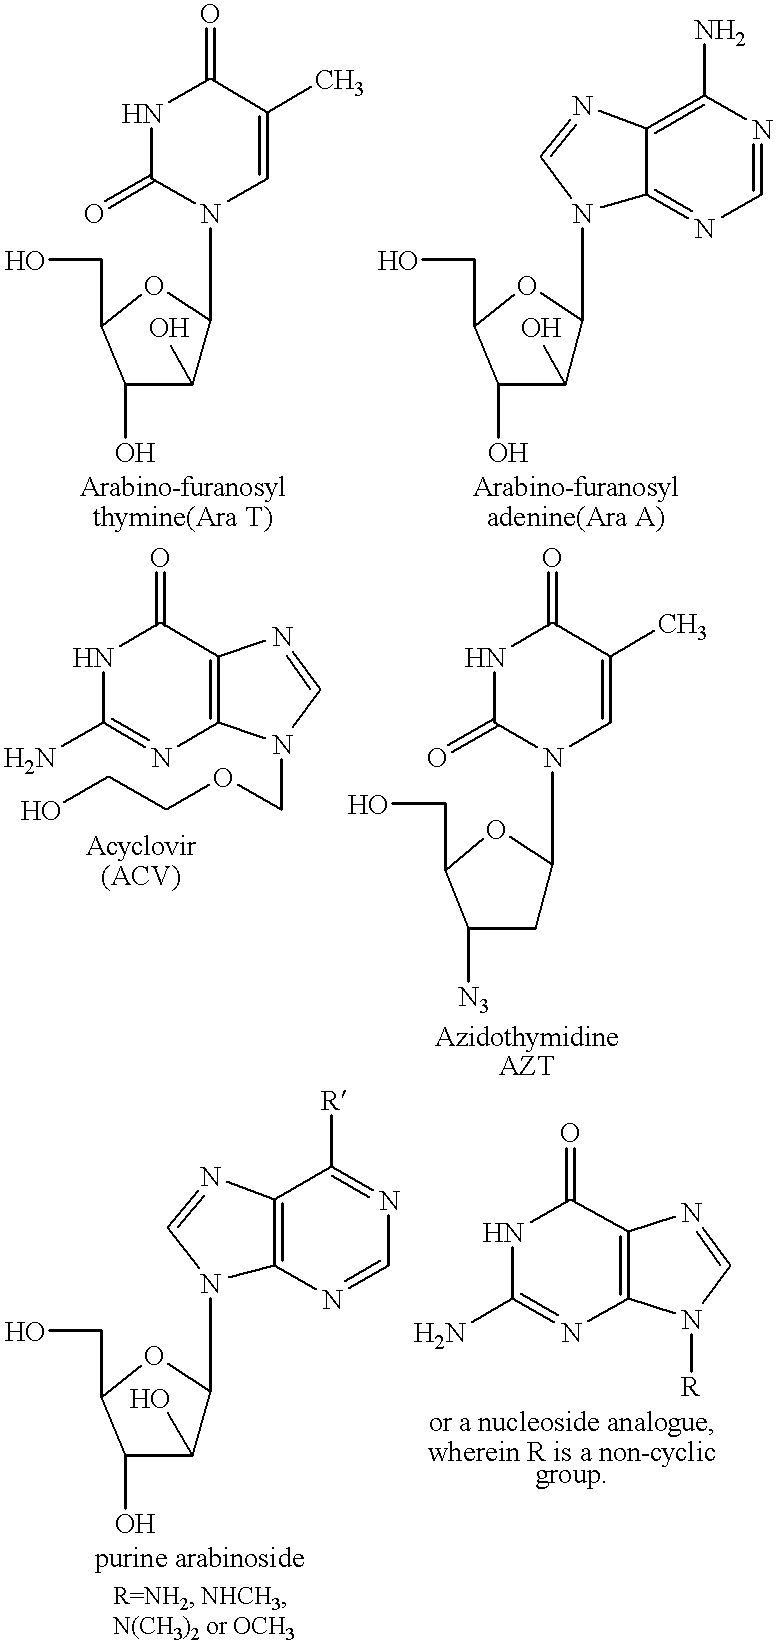 Fatty acid esters of nucleoside analogs